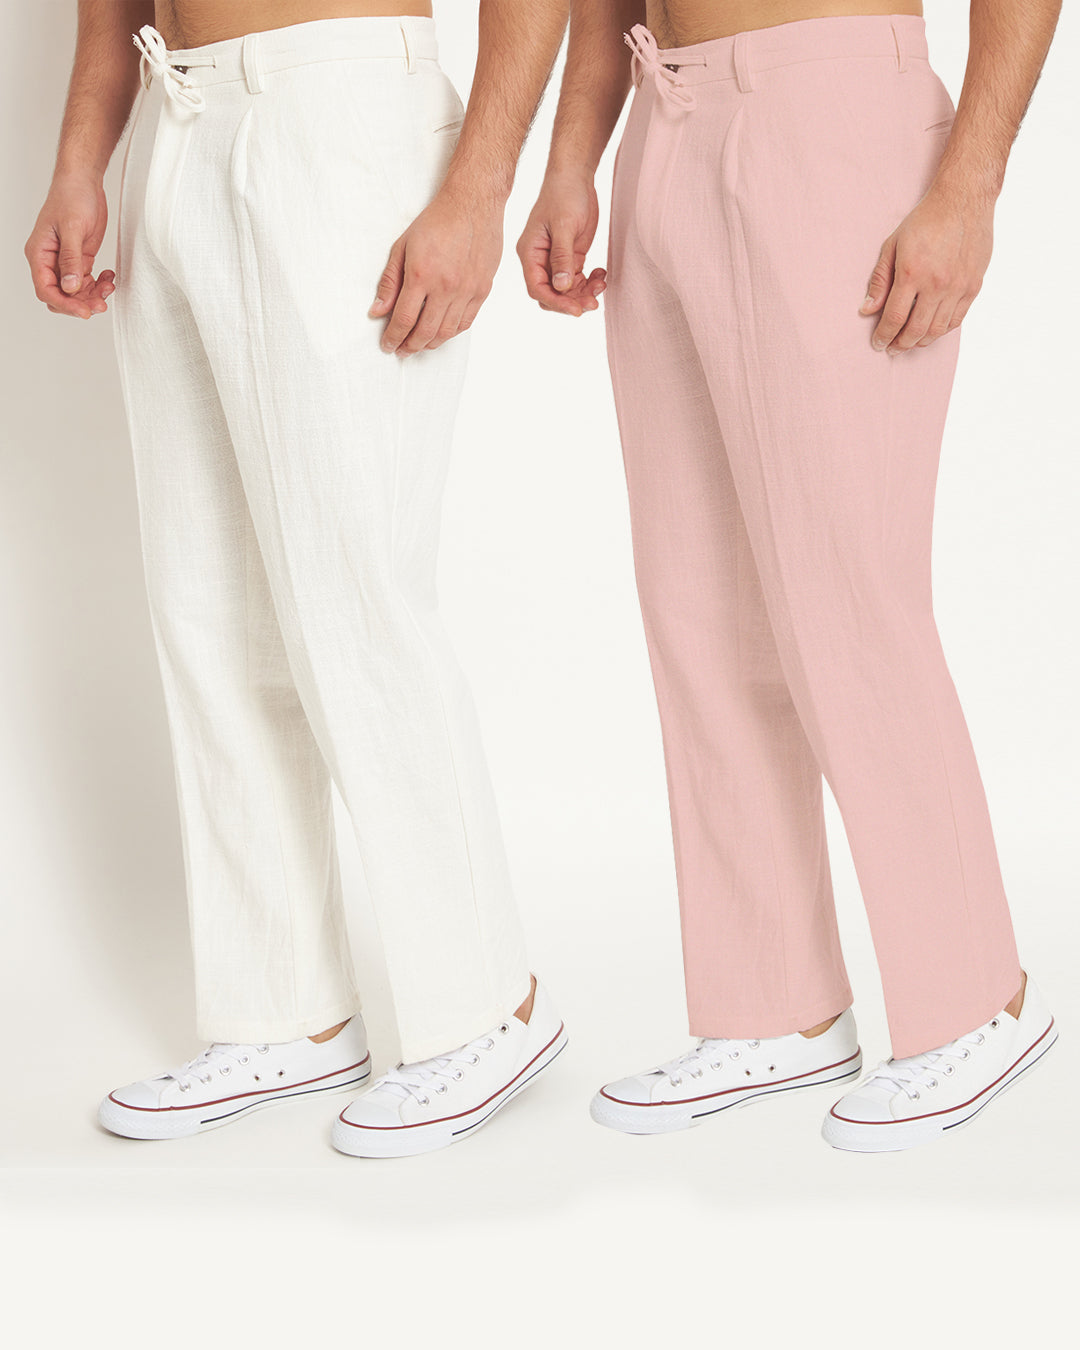 Combo: Casual Ease Fondant Pink & White Men's Pants - Set of 2